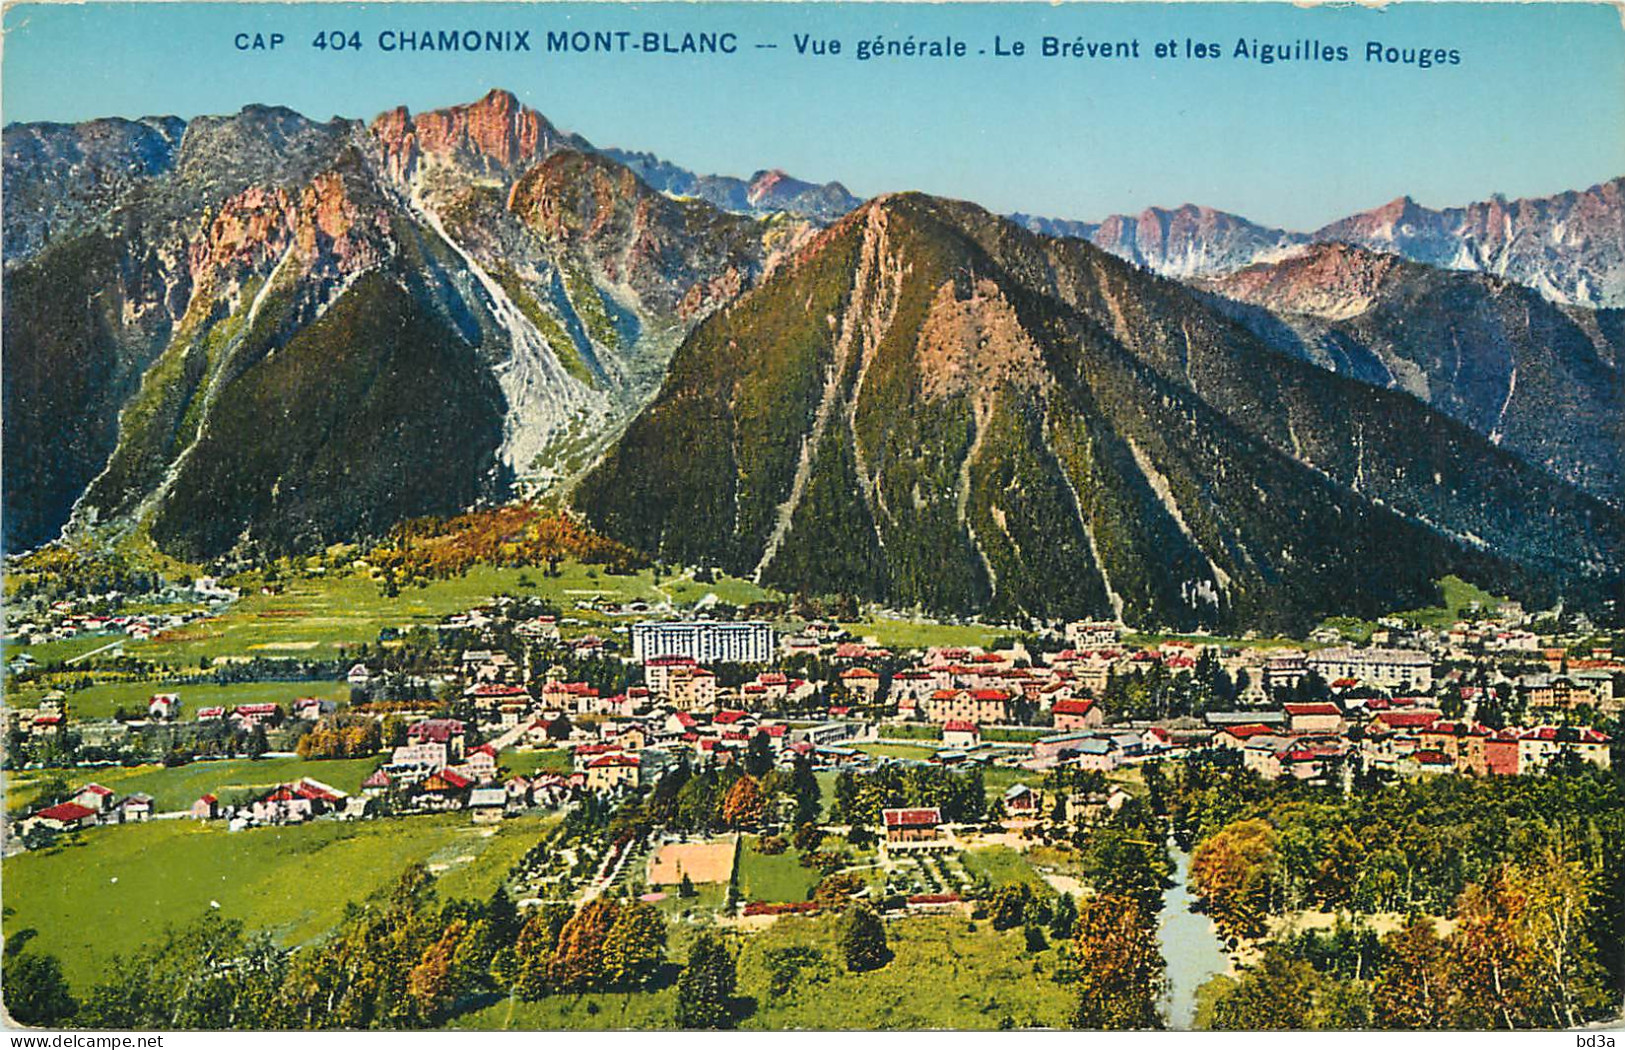   74 -  CHAMONIX MONT BLANC - VUE GENERALE - Chamonix-Mont-Blanc